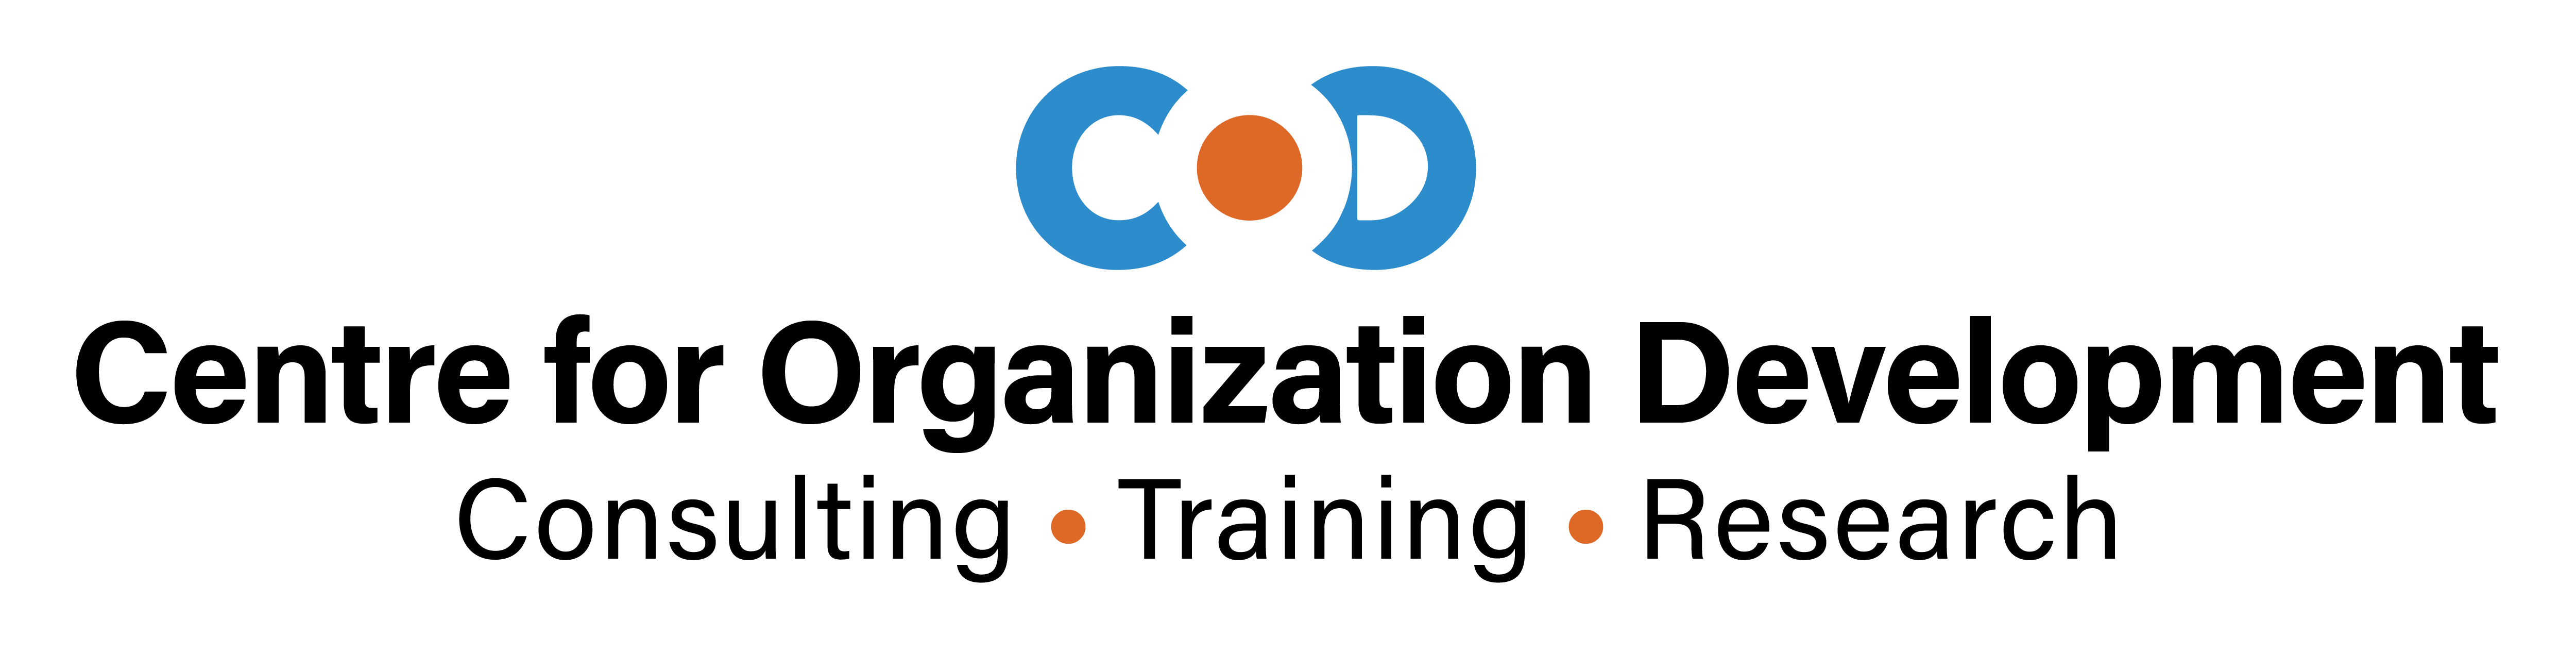 cod-logo-final